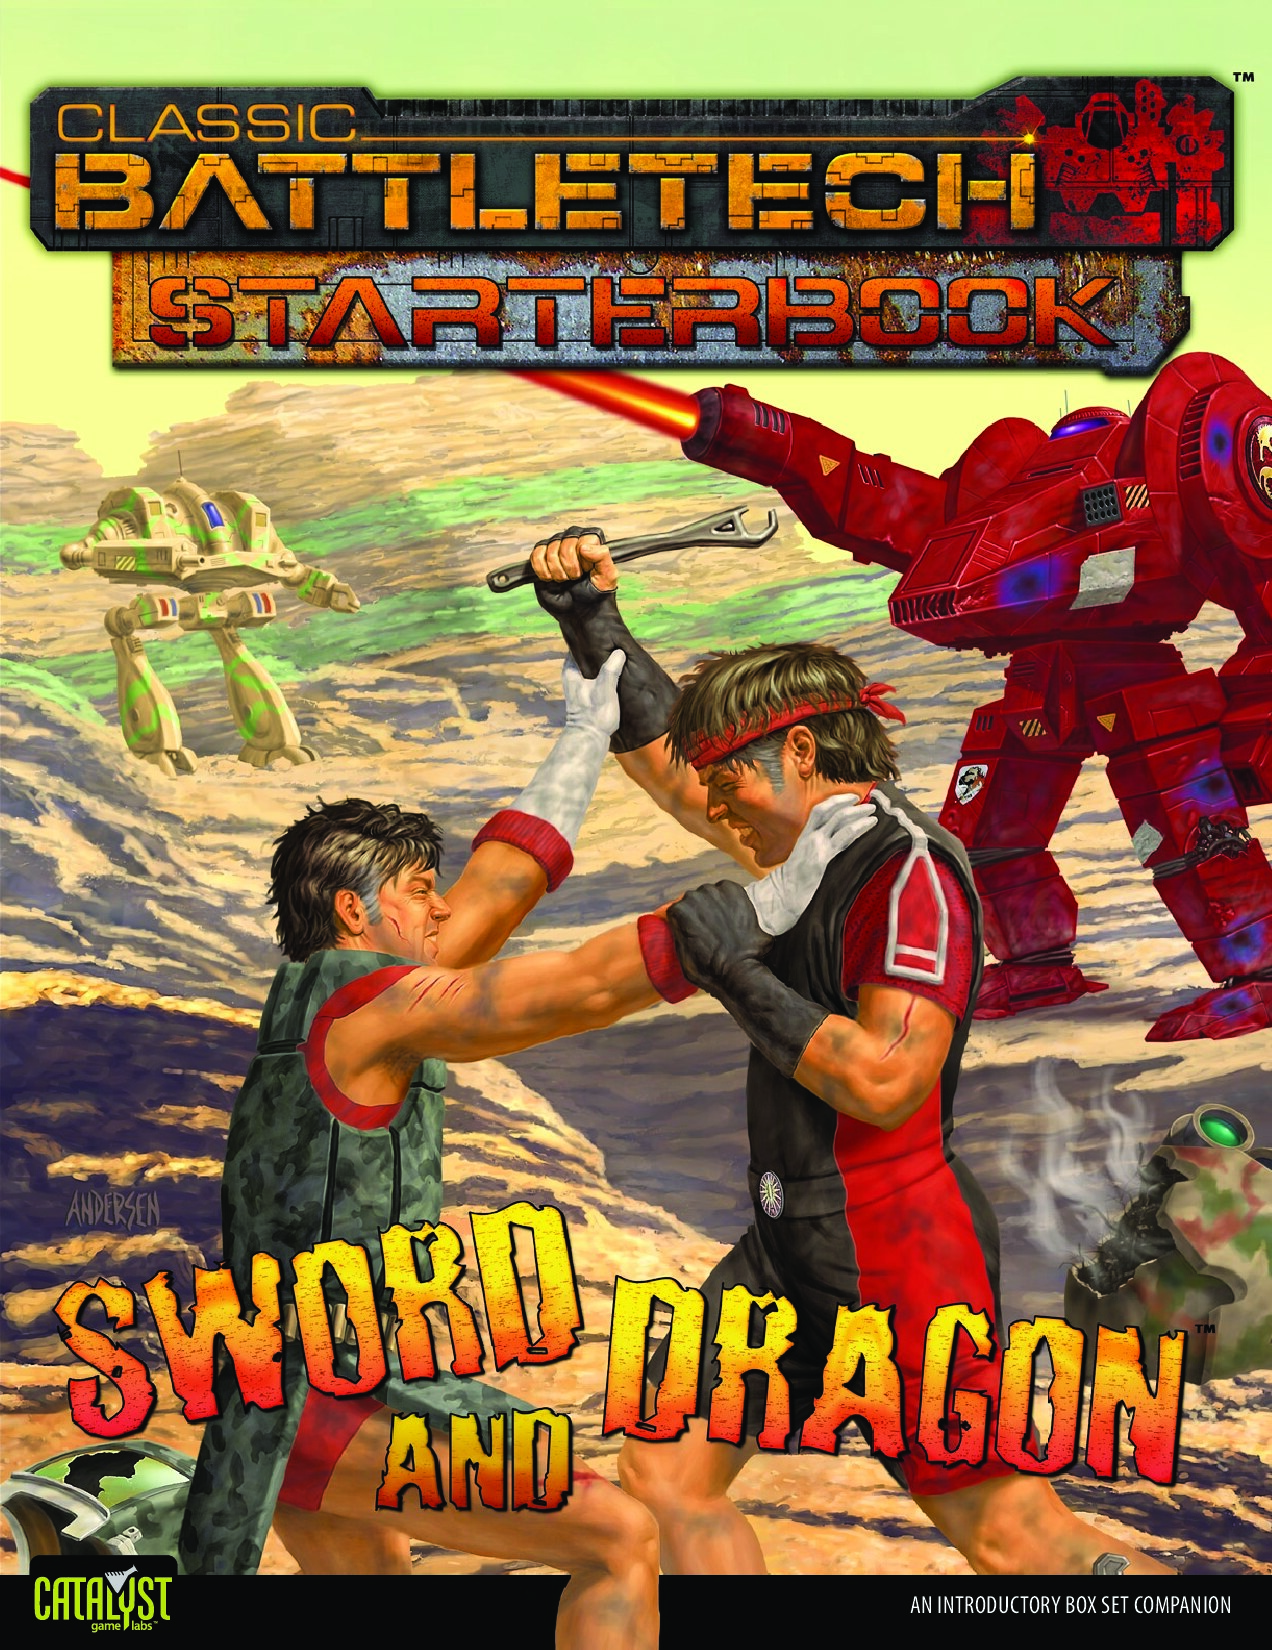 Starterbook: Sword and Dragon